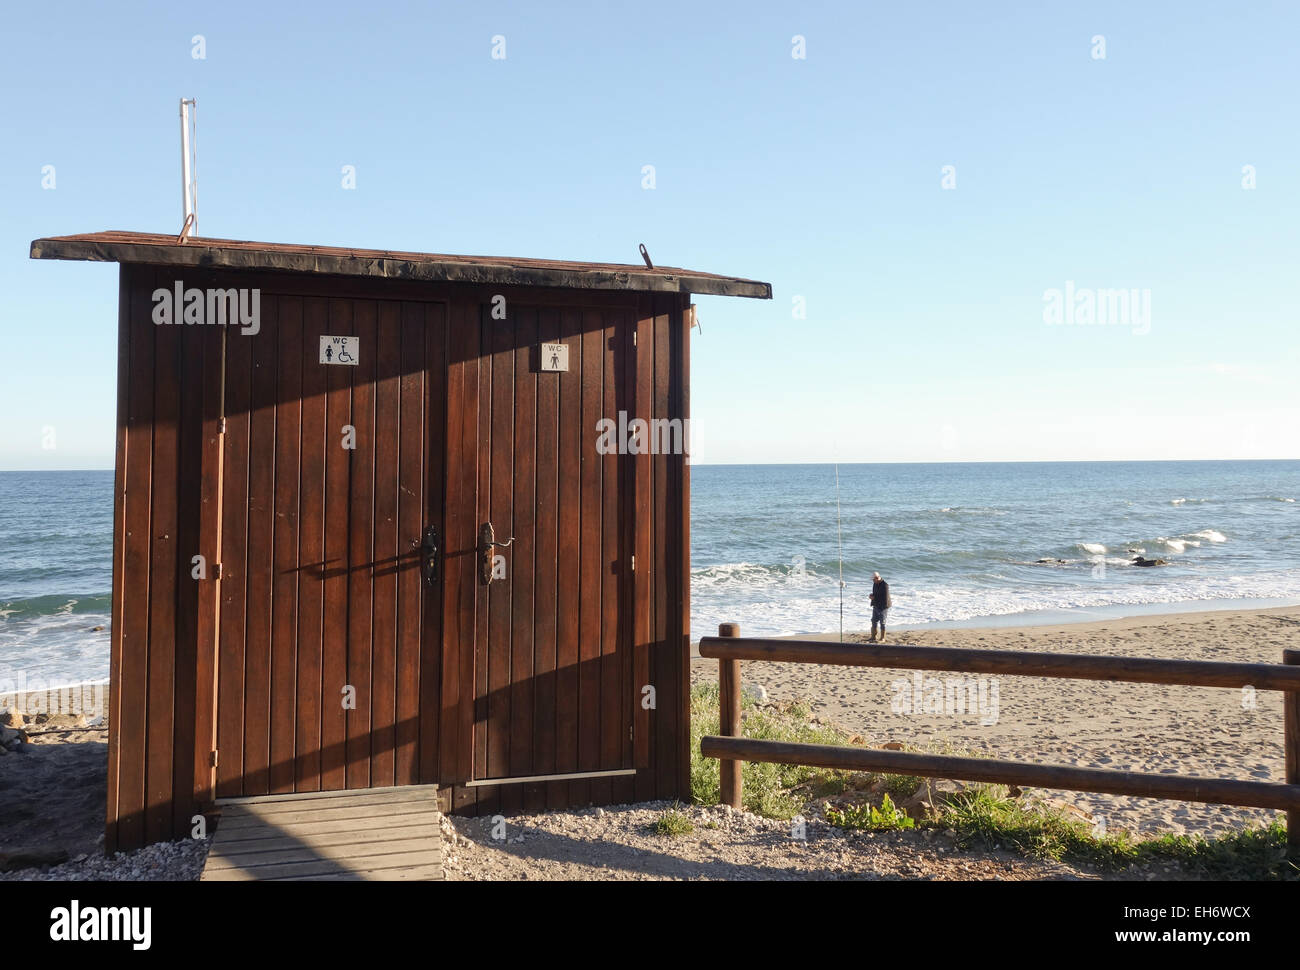 Public toilet, WC, beach at wooden boardwalk, seafront promenade, del Sol, Andalusia, Spain Photo -